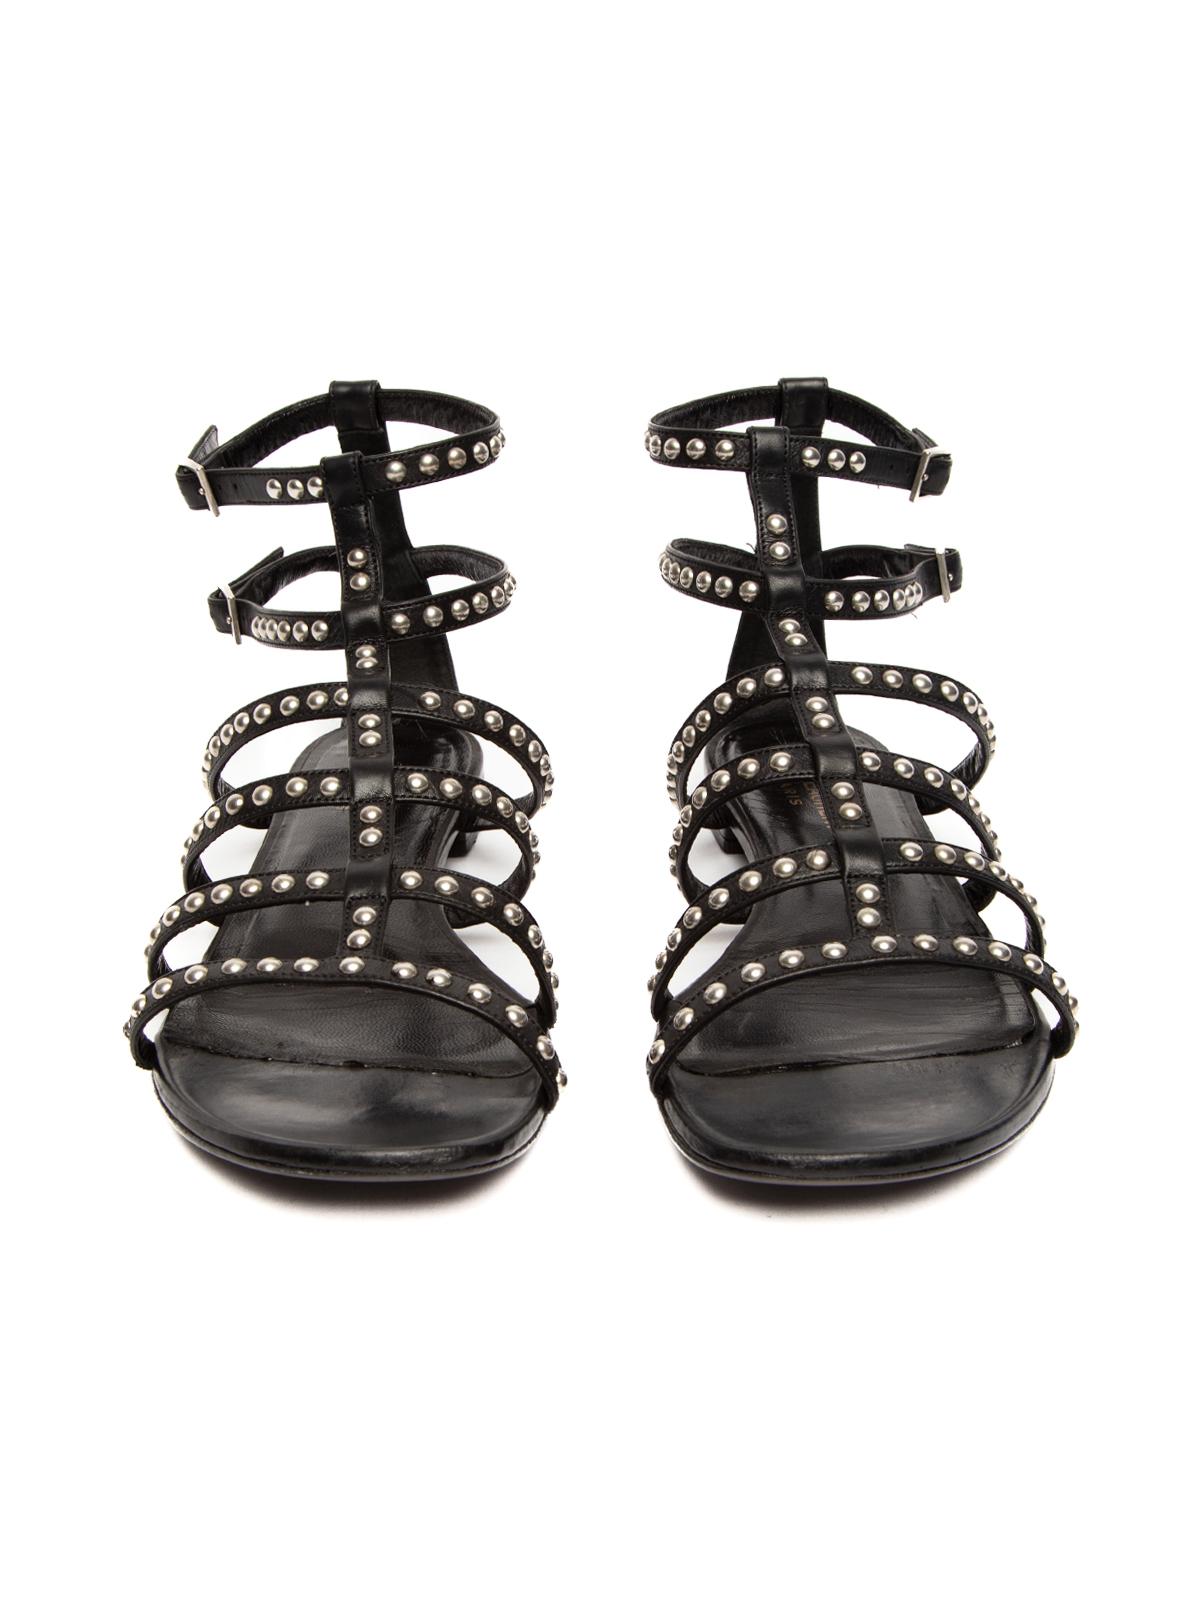 Black Pre-Loved Saint Laurent Women's Studded Strappy Sandals